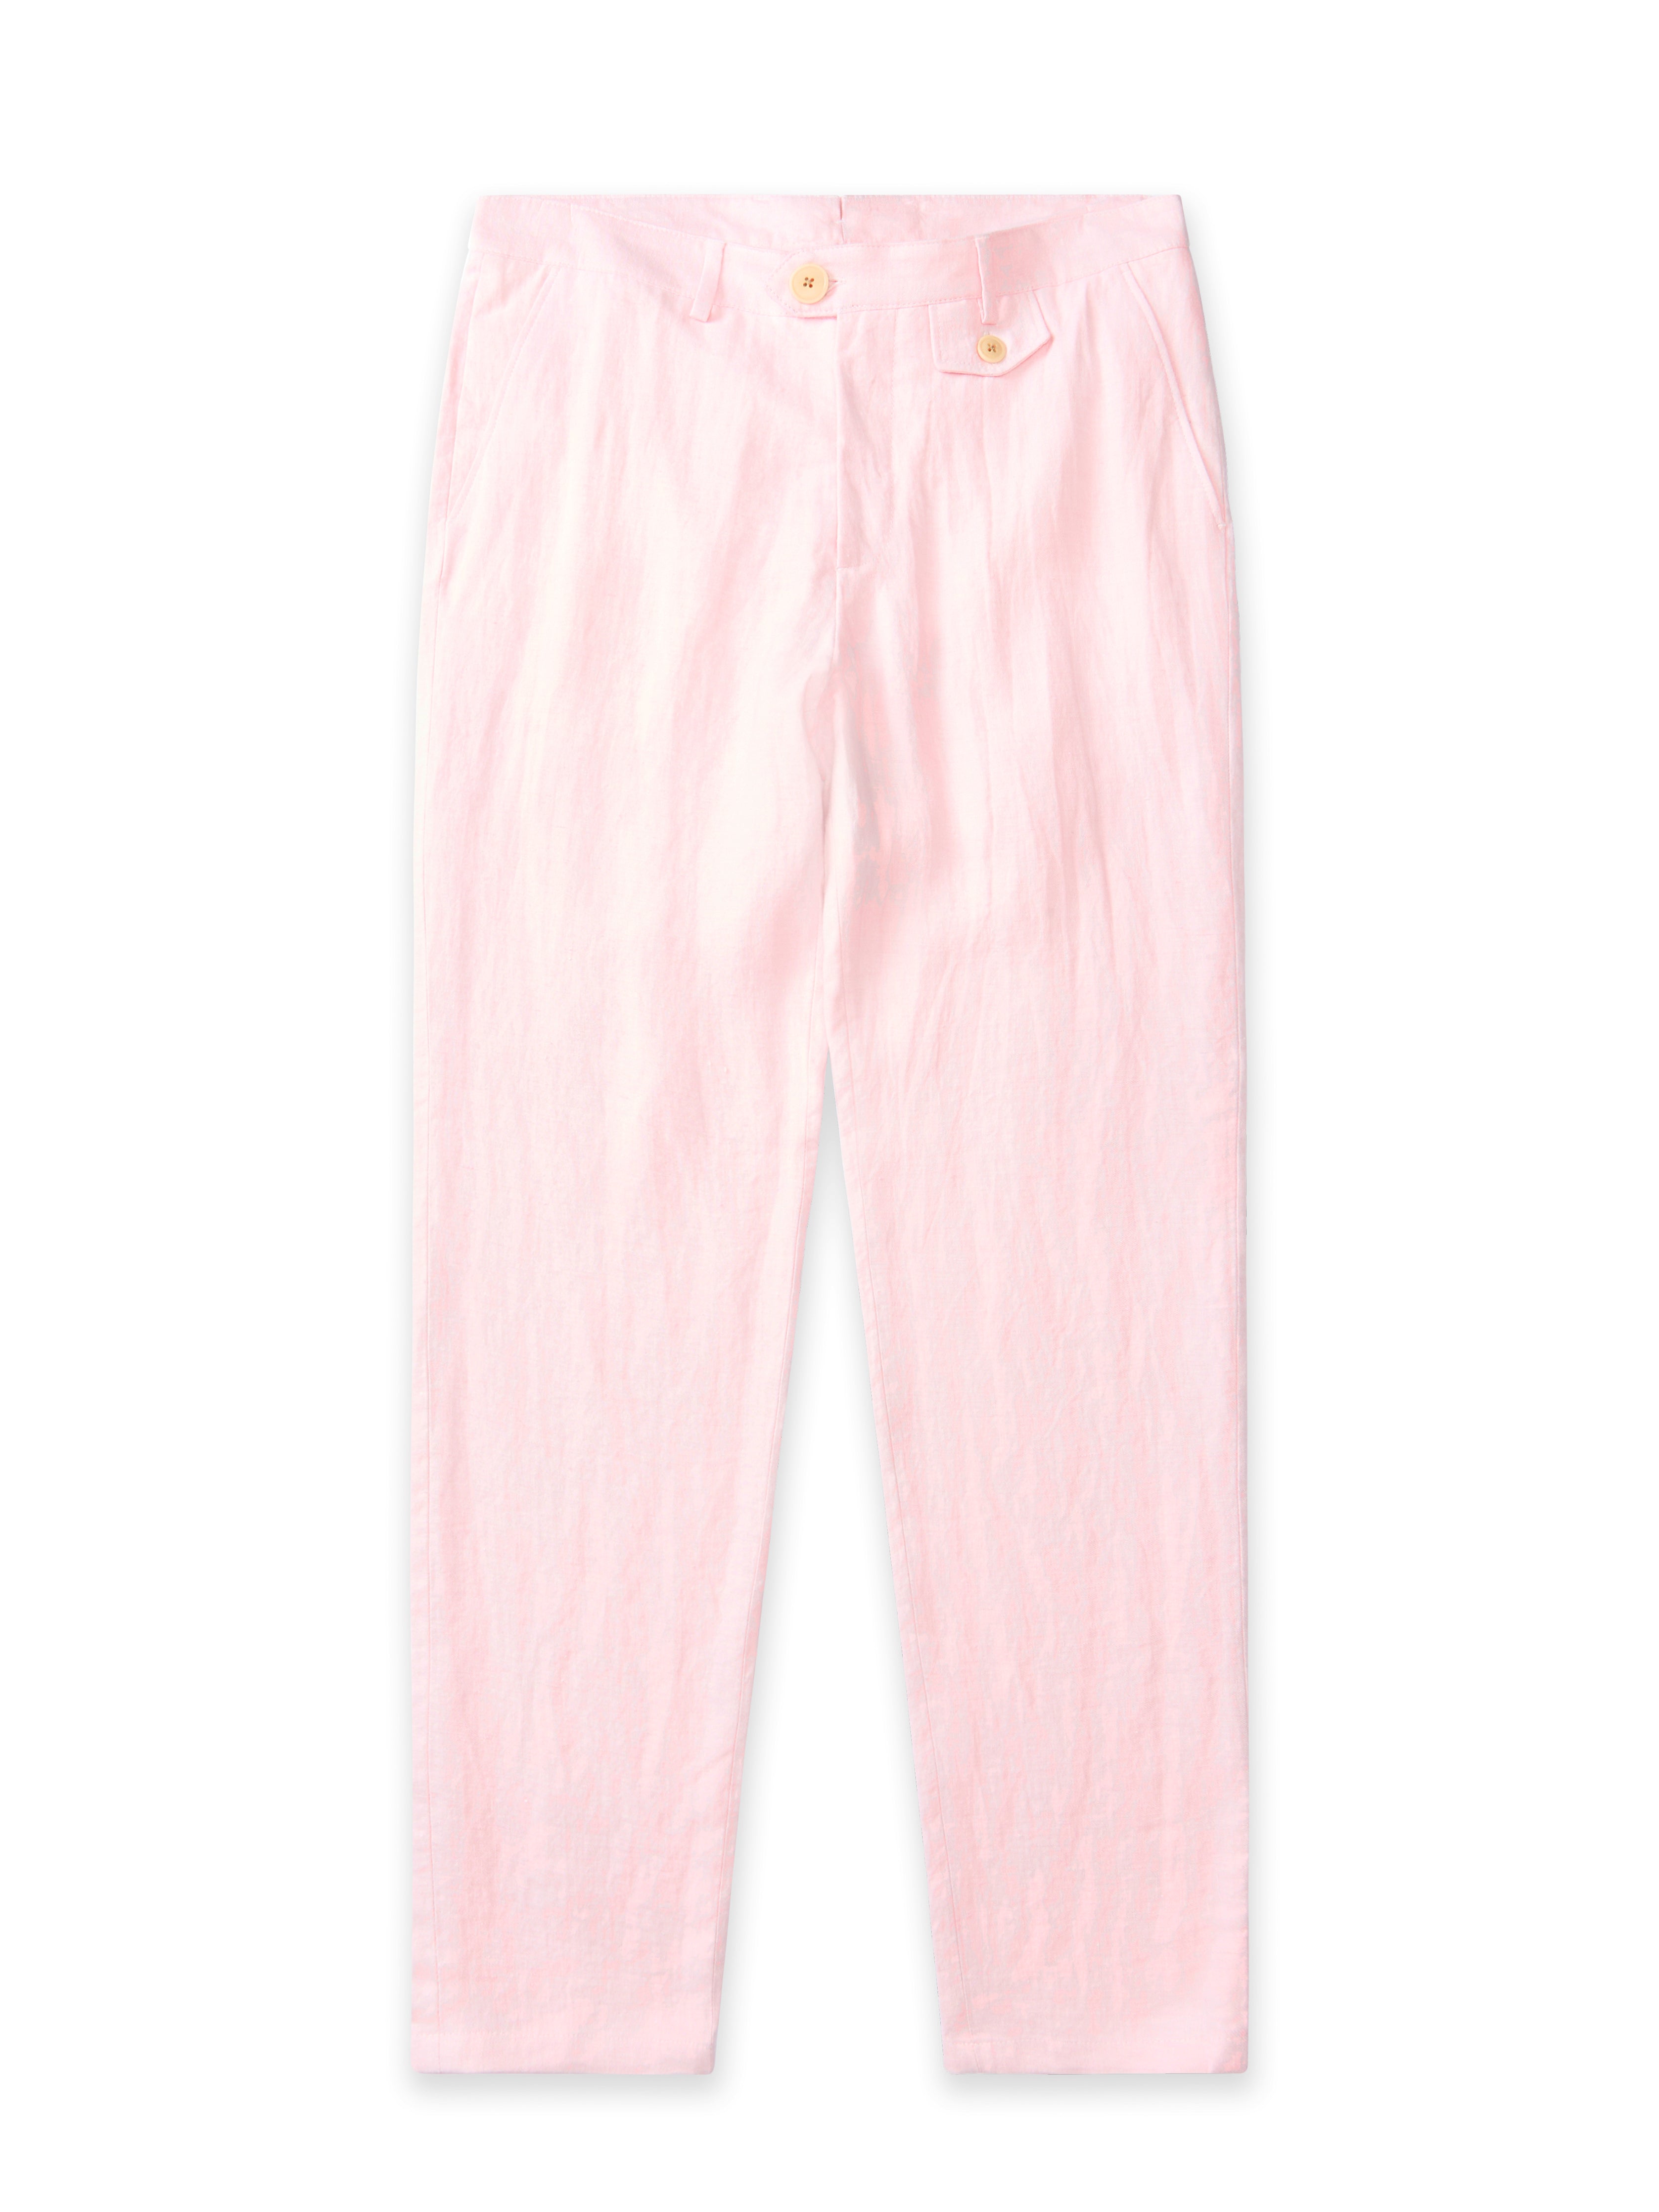 Pink Drescher Wyndhams Suit